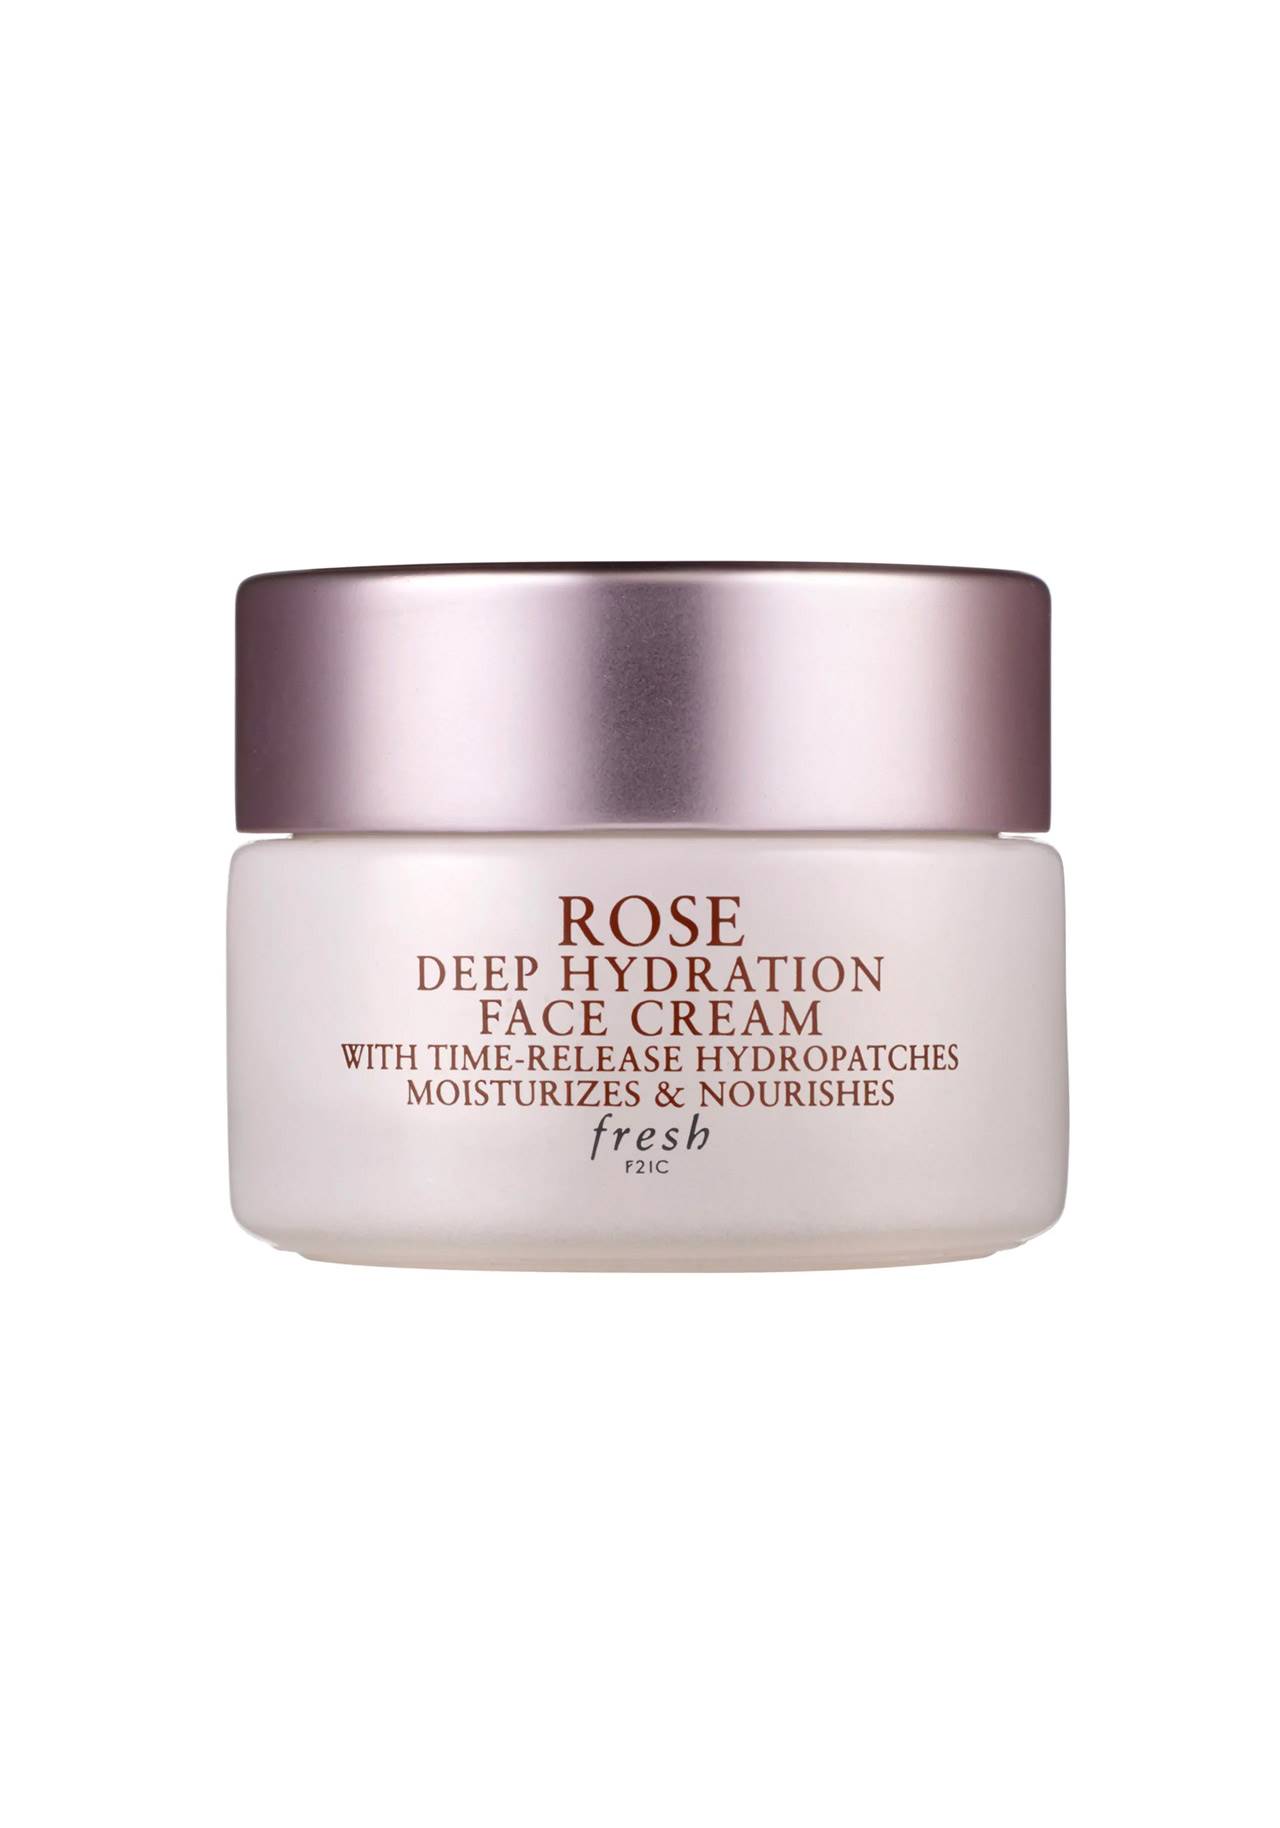 cosméticos sephora baratos Rose Deep Hydration Face Cream de Fresh, 45,95€